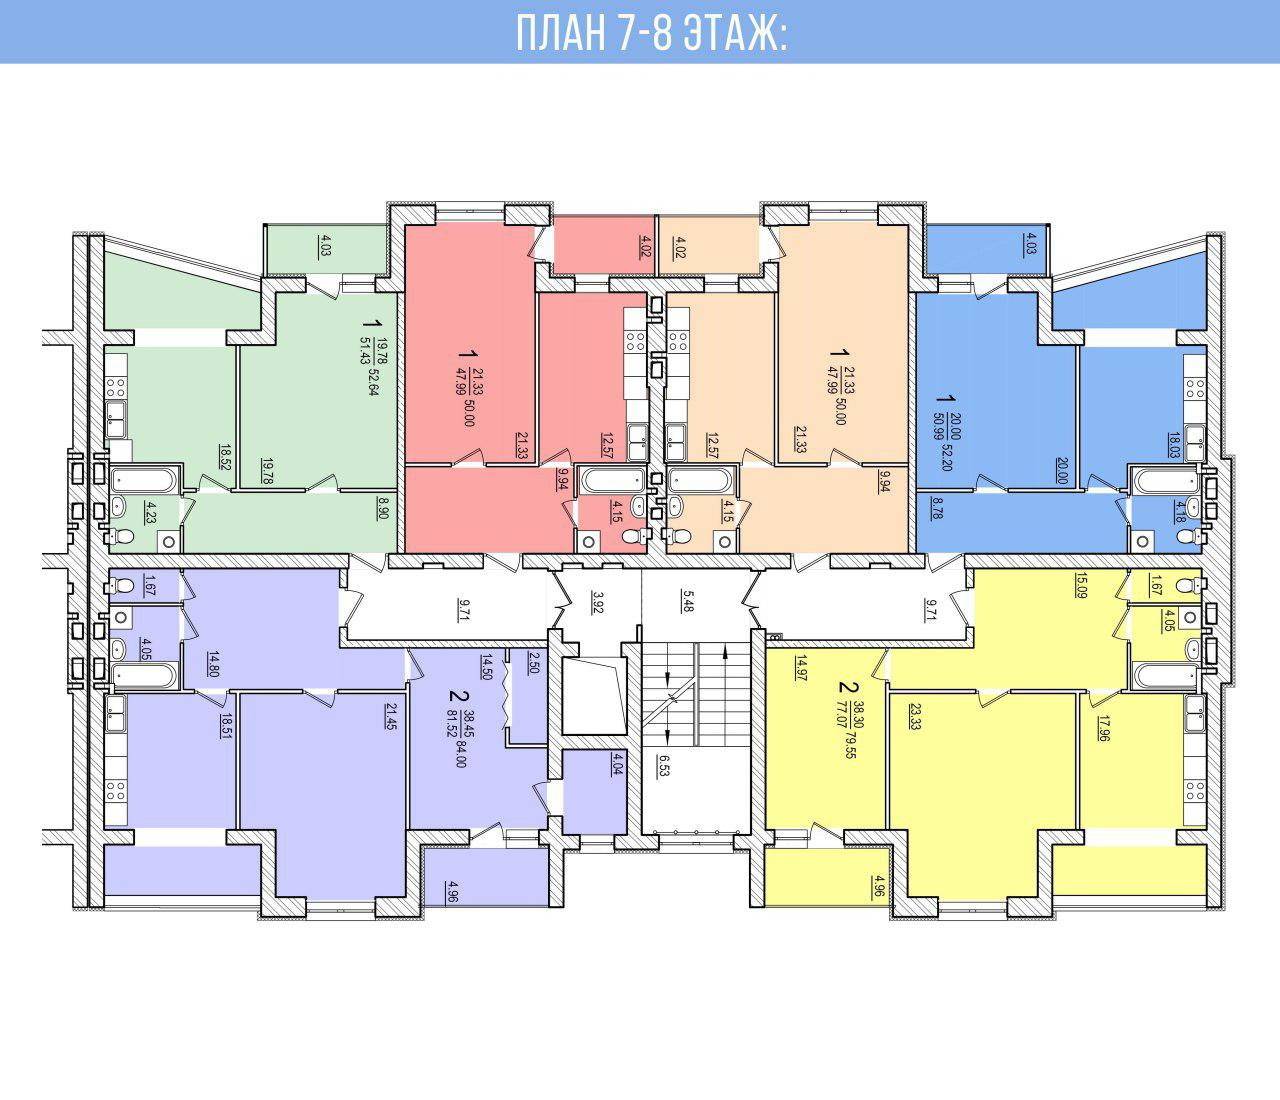 ЖК Dominant, секция 3, план 7-8 этажа